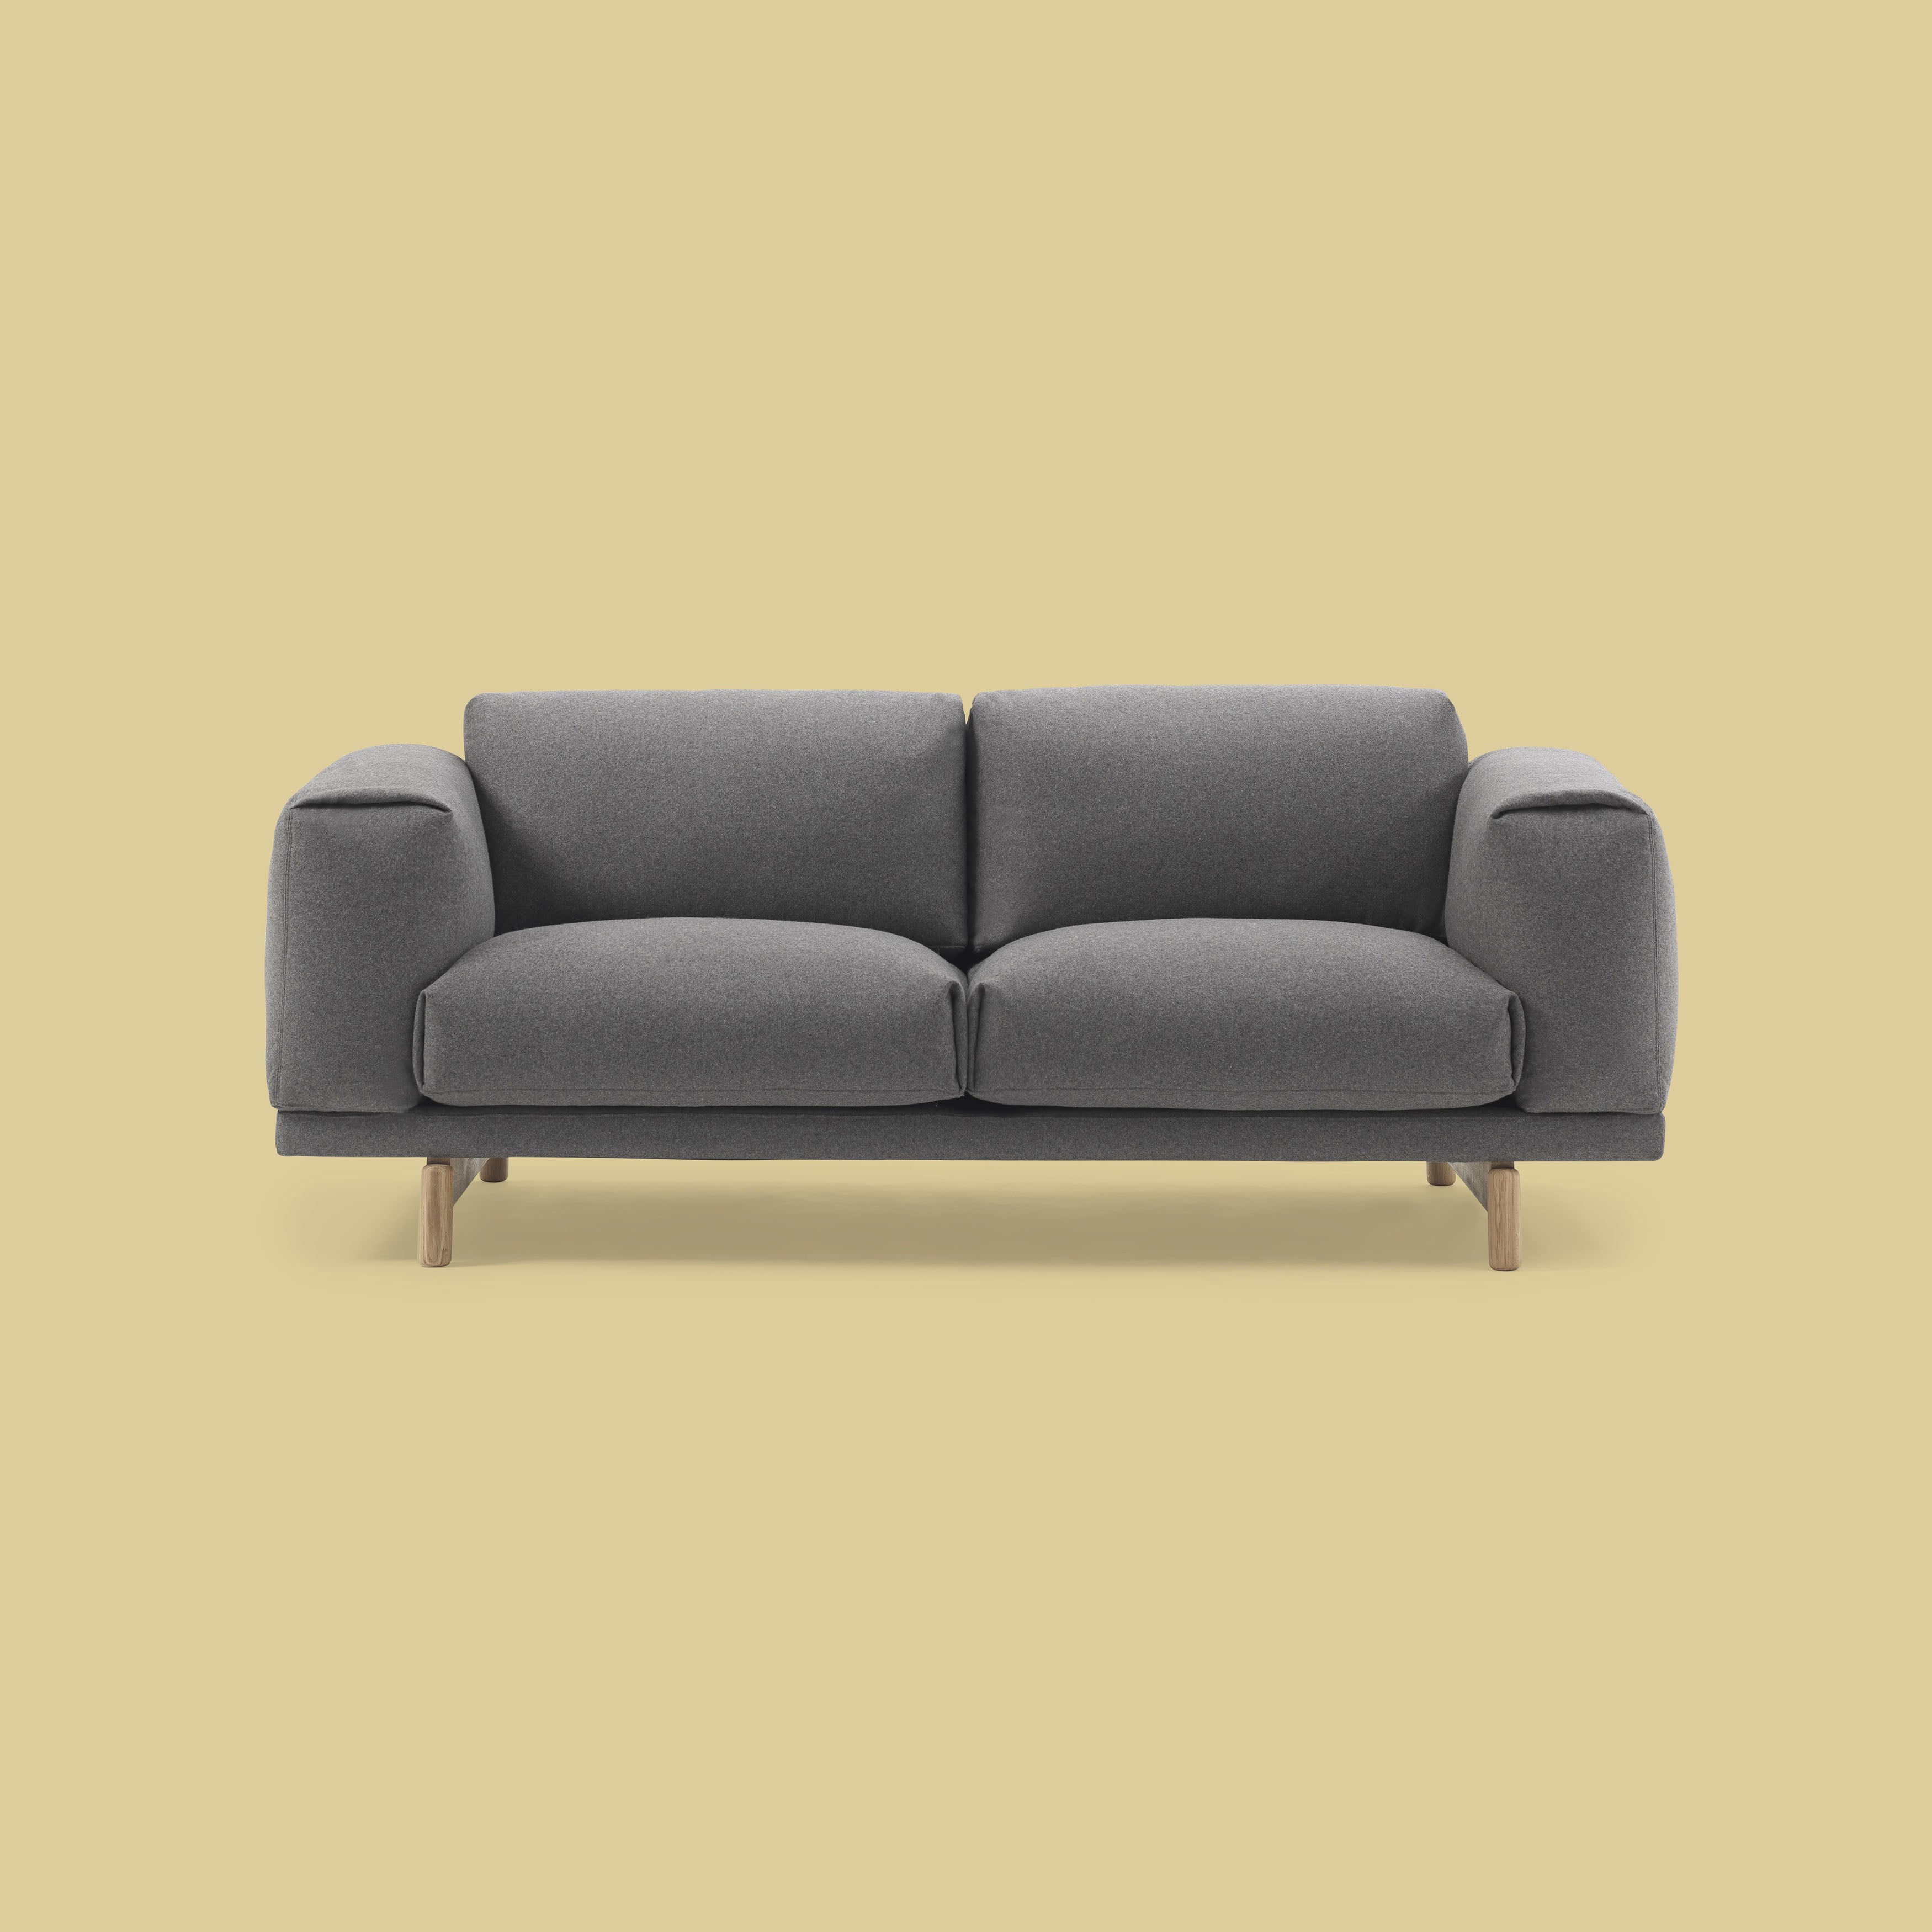 Rest Sofa: 2 Seater